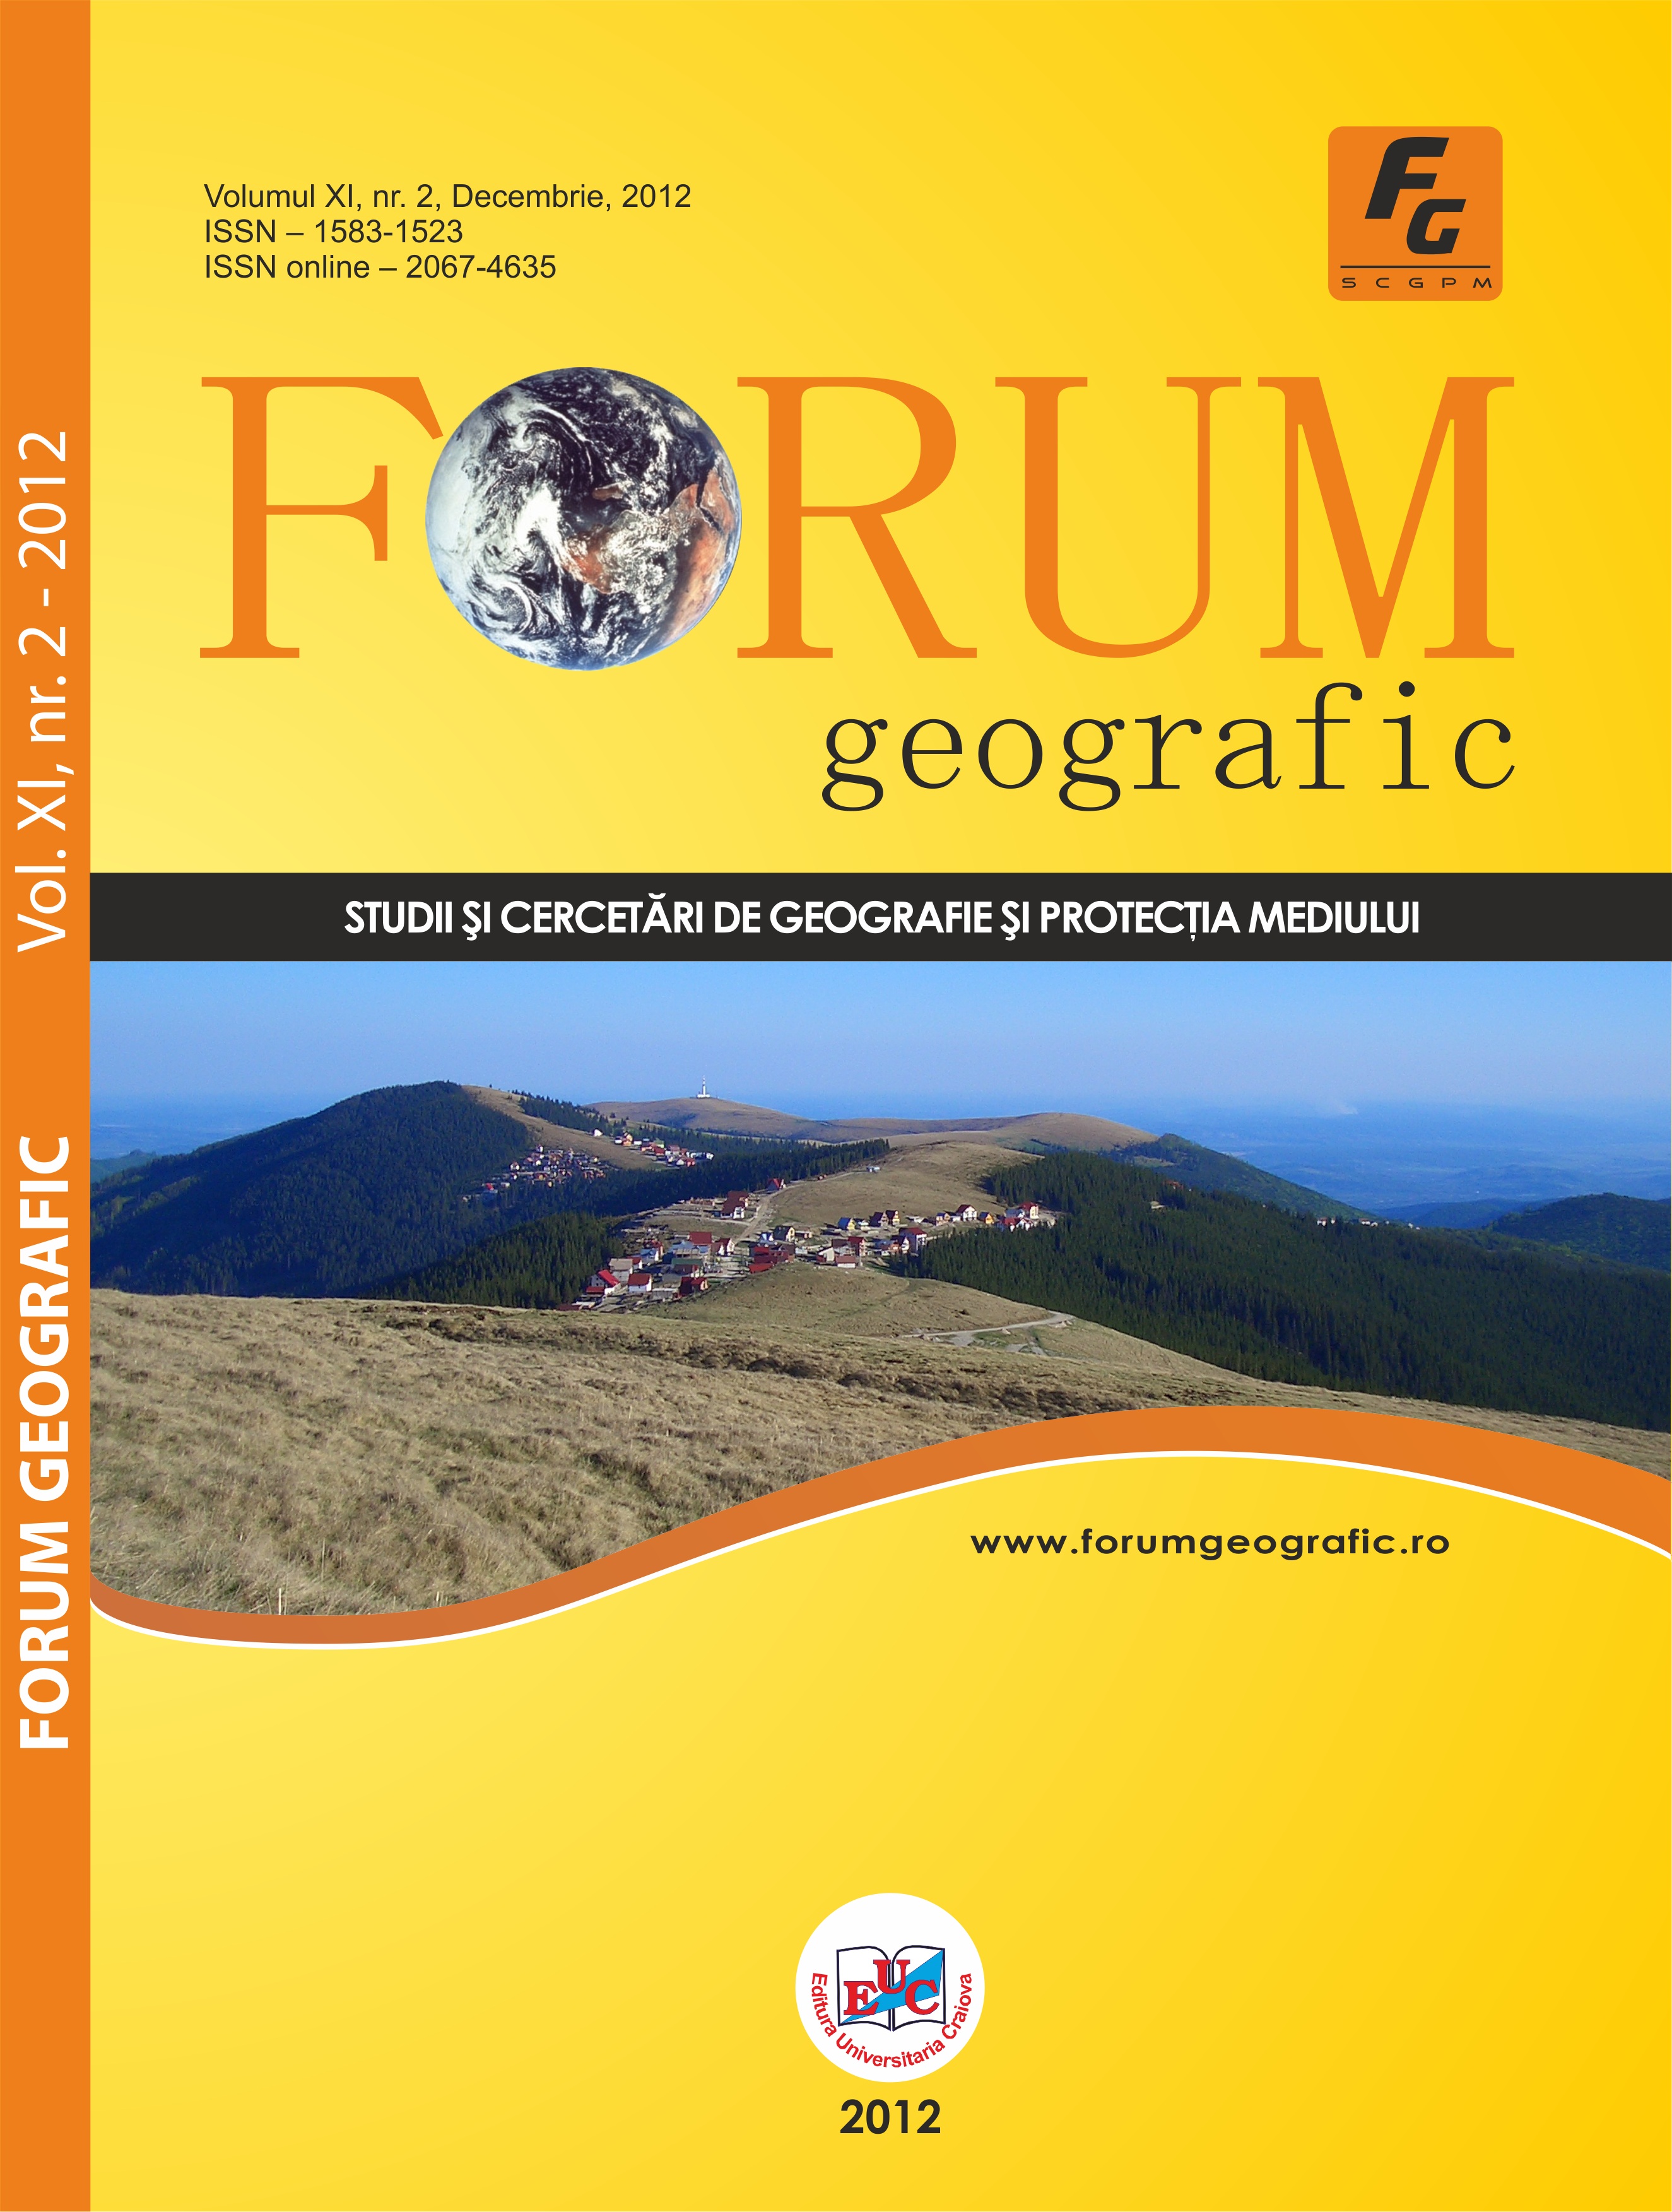 Forum geografic: Volume XI, issue 2